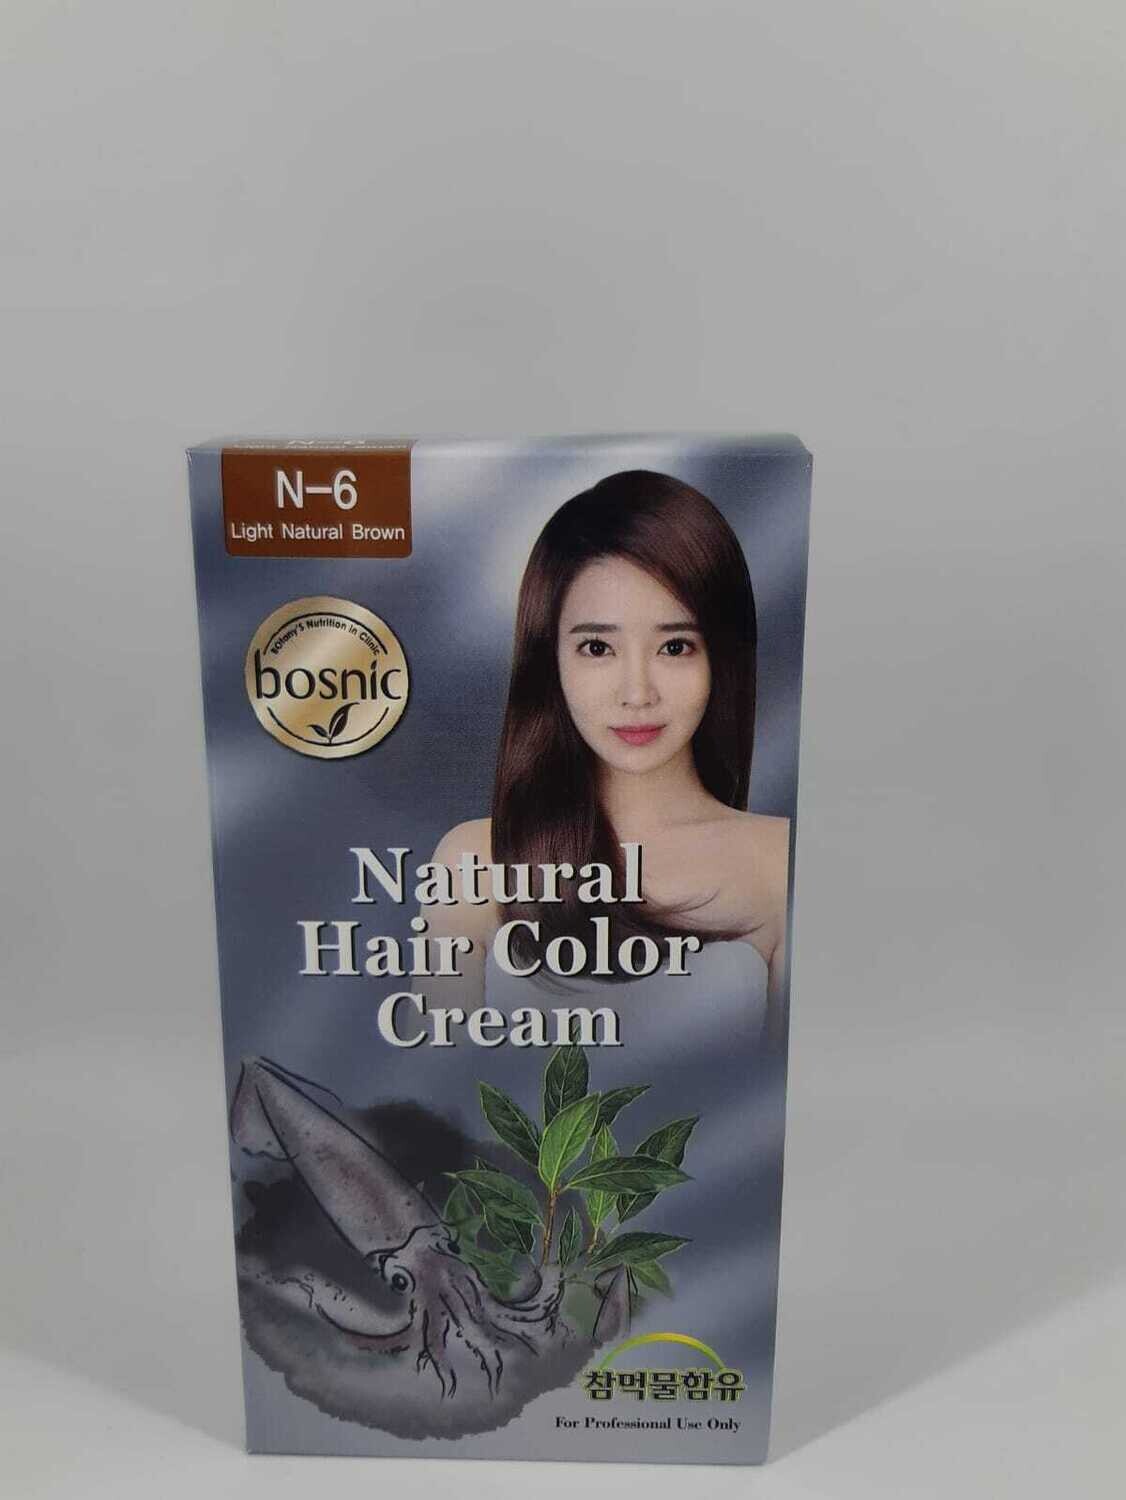 Bosnic N-6 Light Natural Brown Natural Hair Color Cream